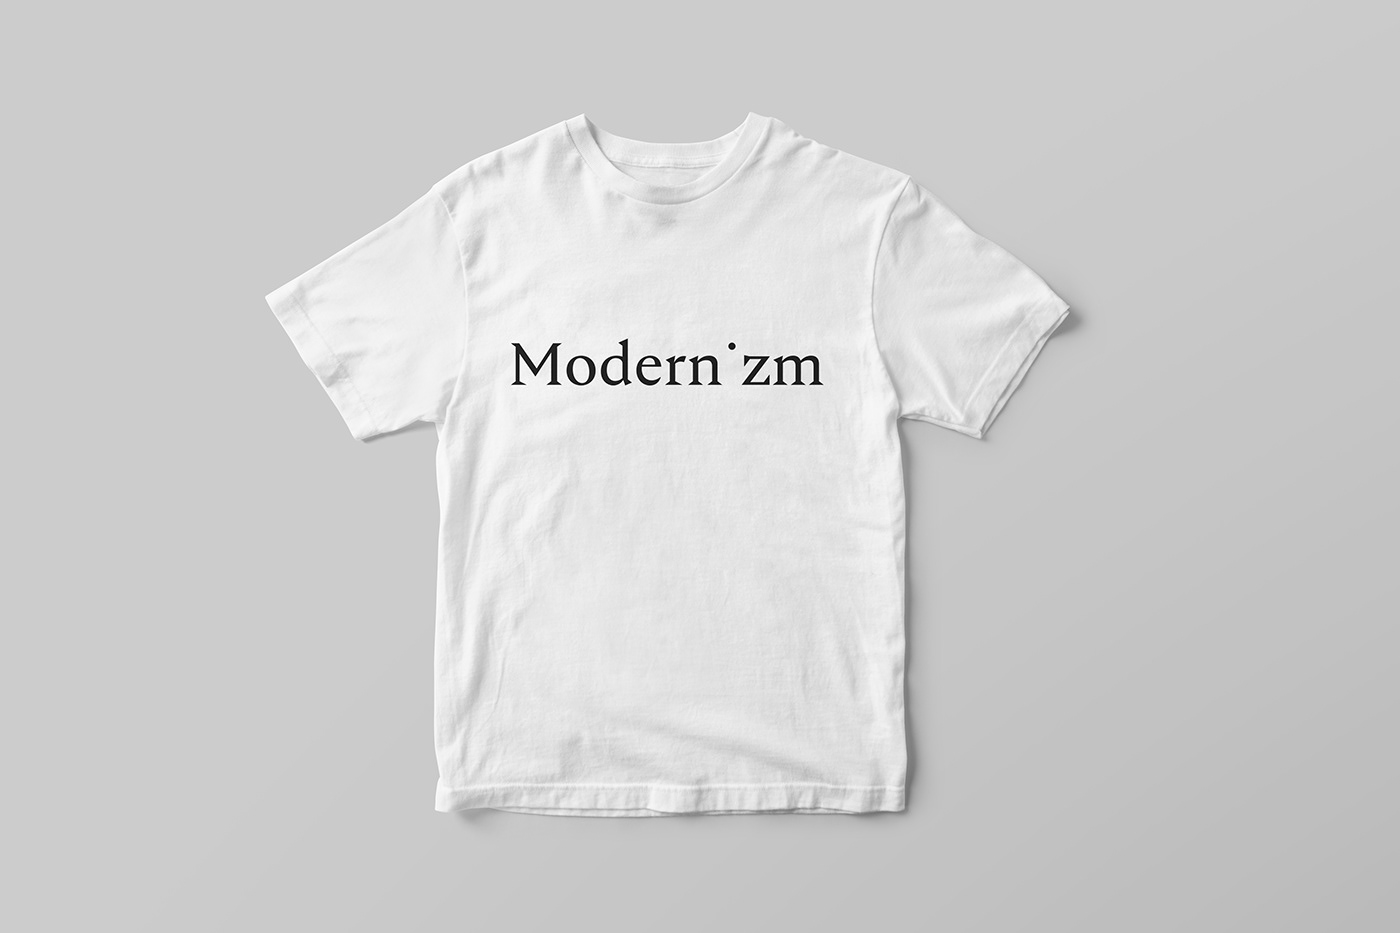 Modernizm koszulka modernism t- shirt architecture modern modernist architecture Minimalism minimalizm tomasz smutek